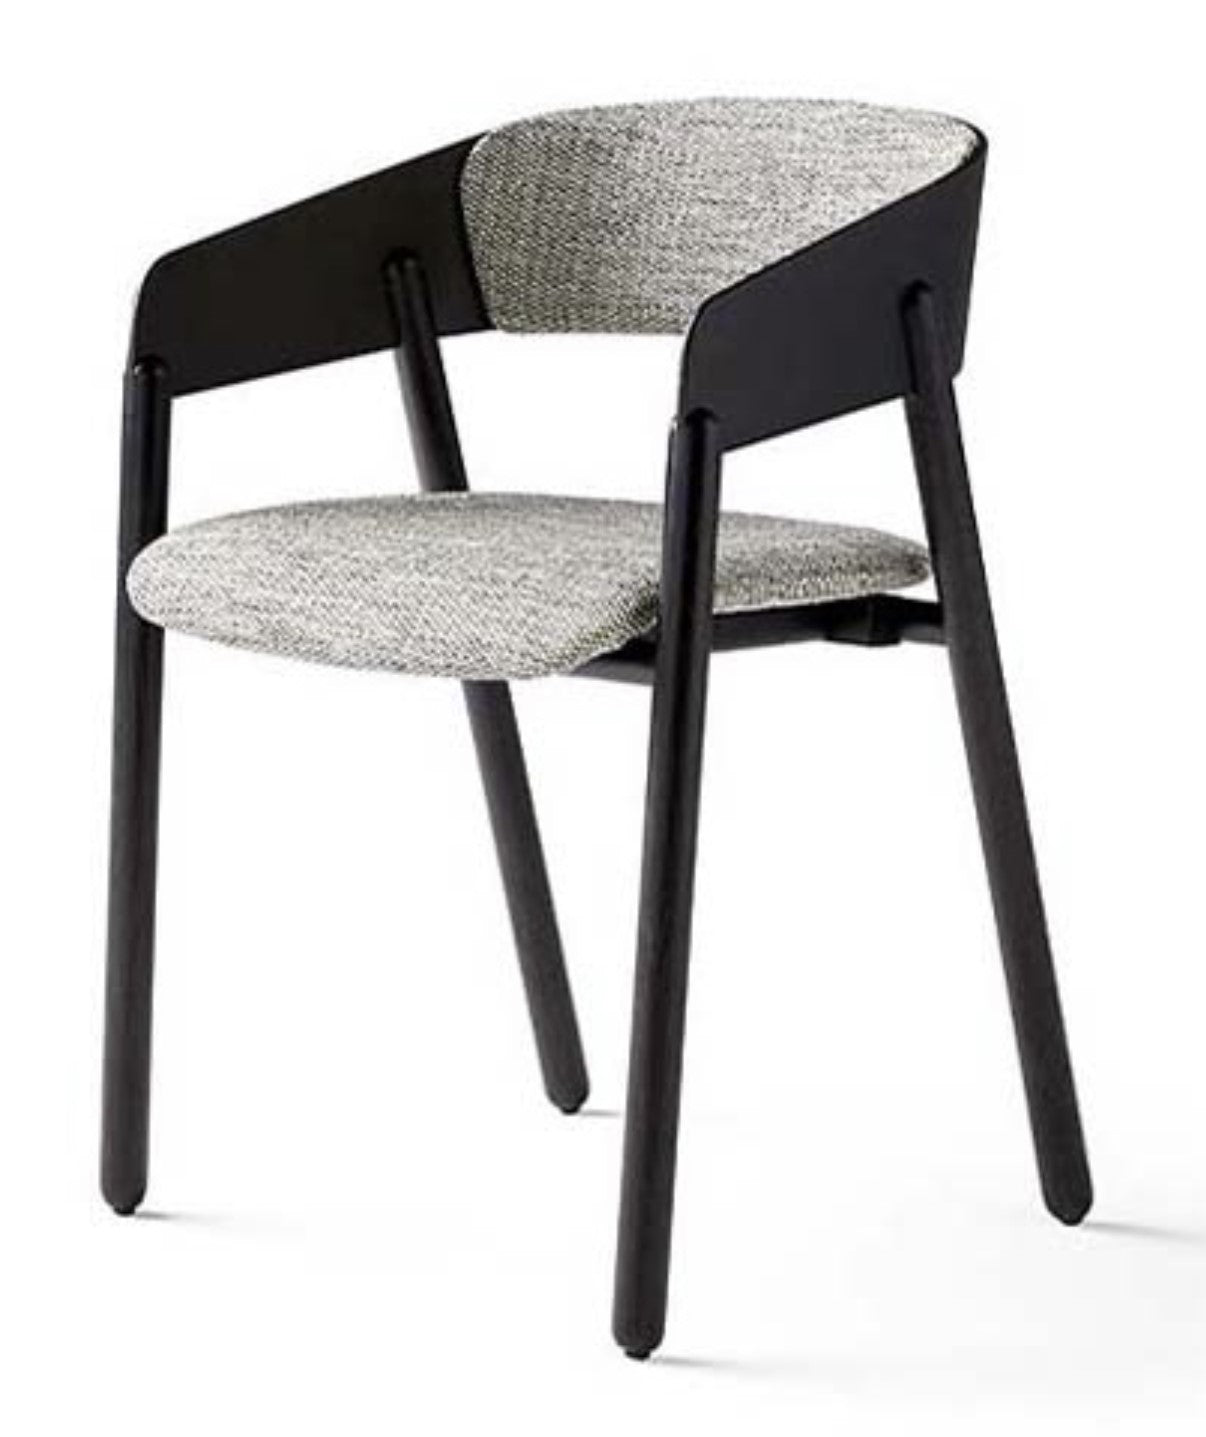 MAVA l Chair by Punt - $995.00